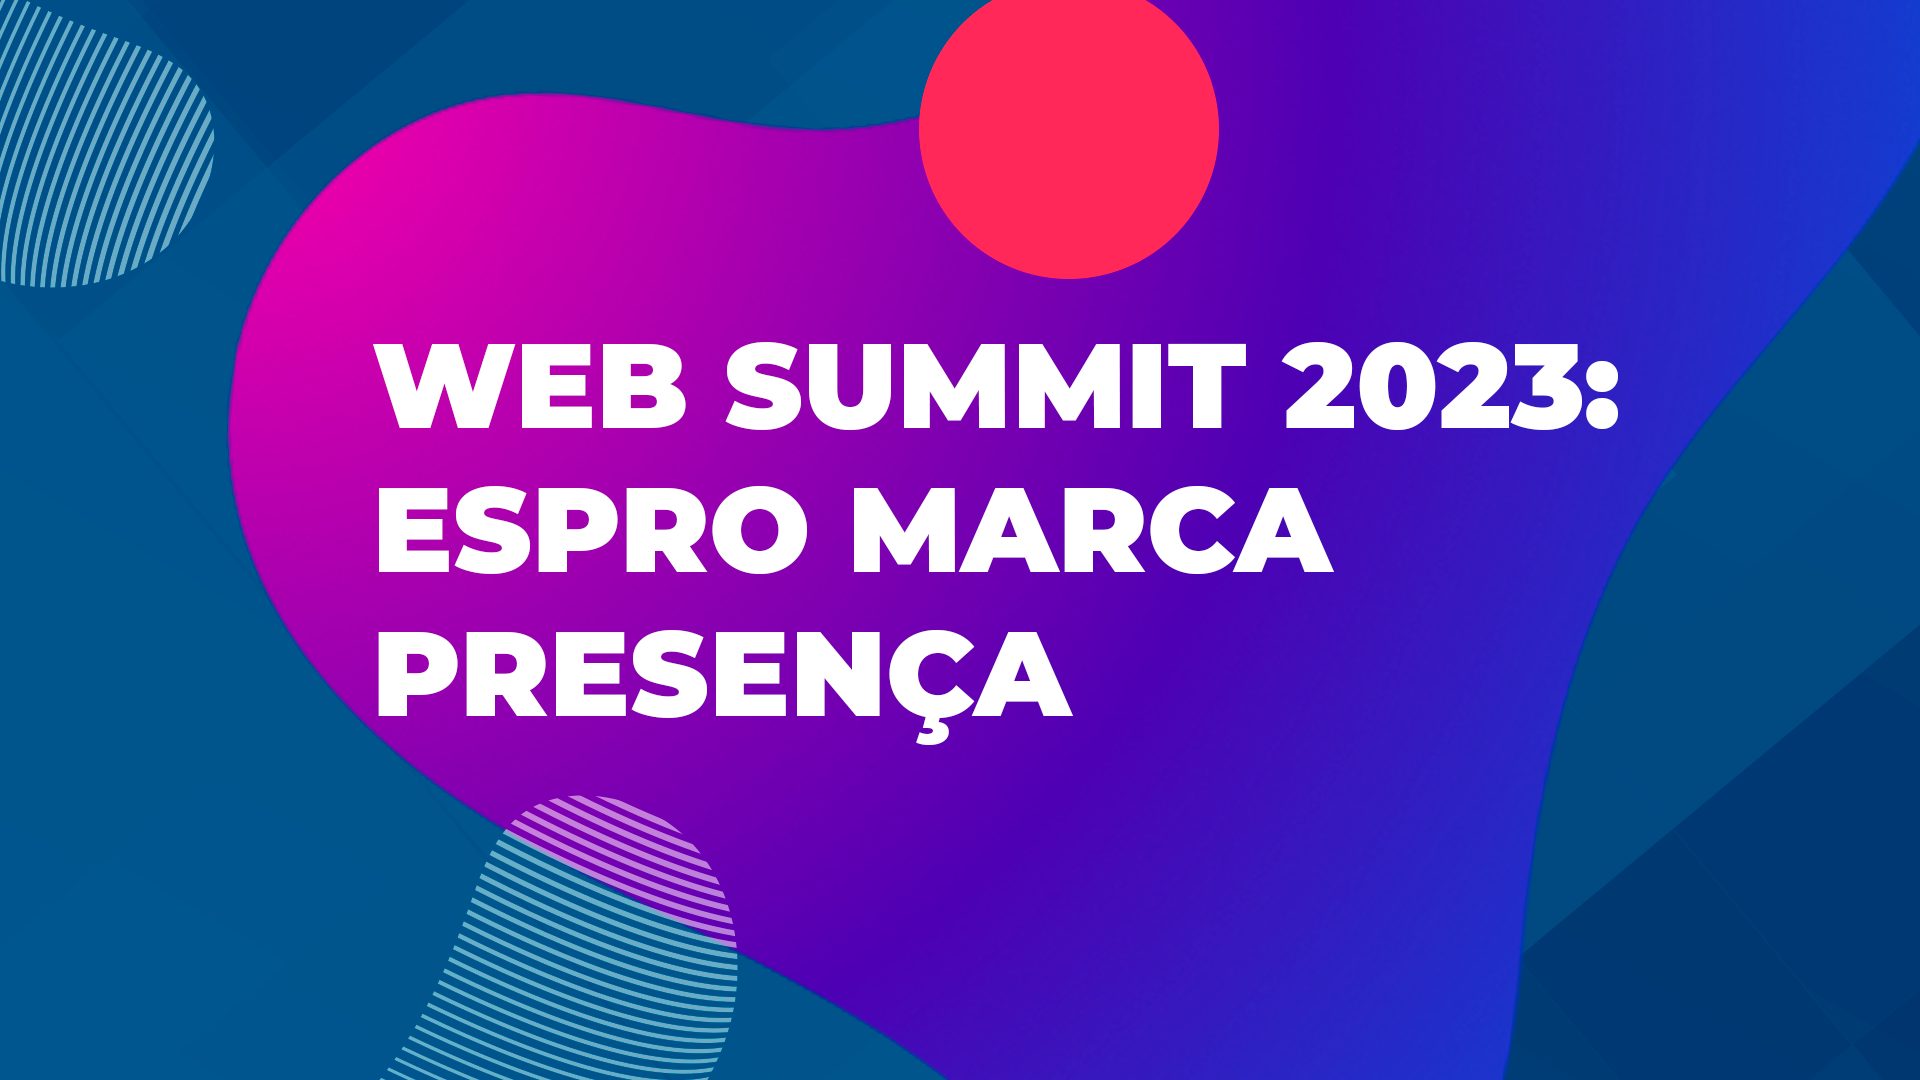 Arte gráfica com a legenda: Web Summit 2023: Espro marca presença